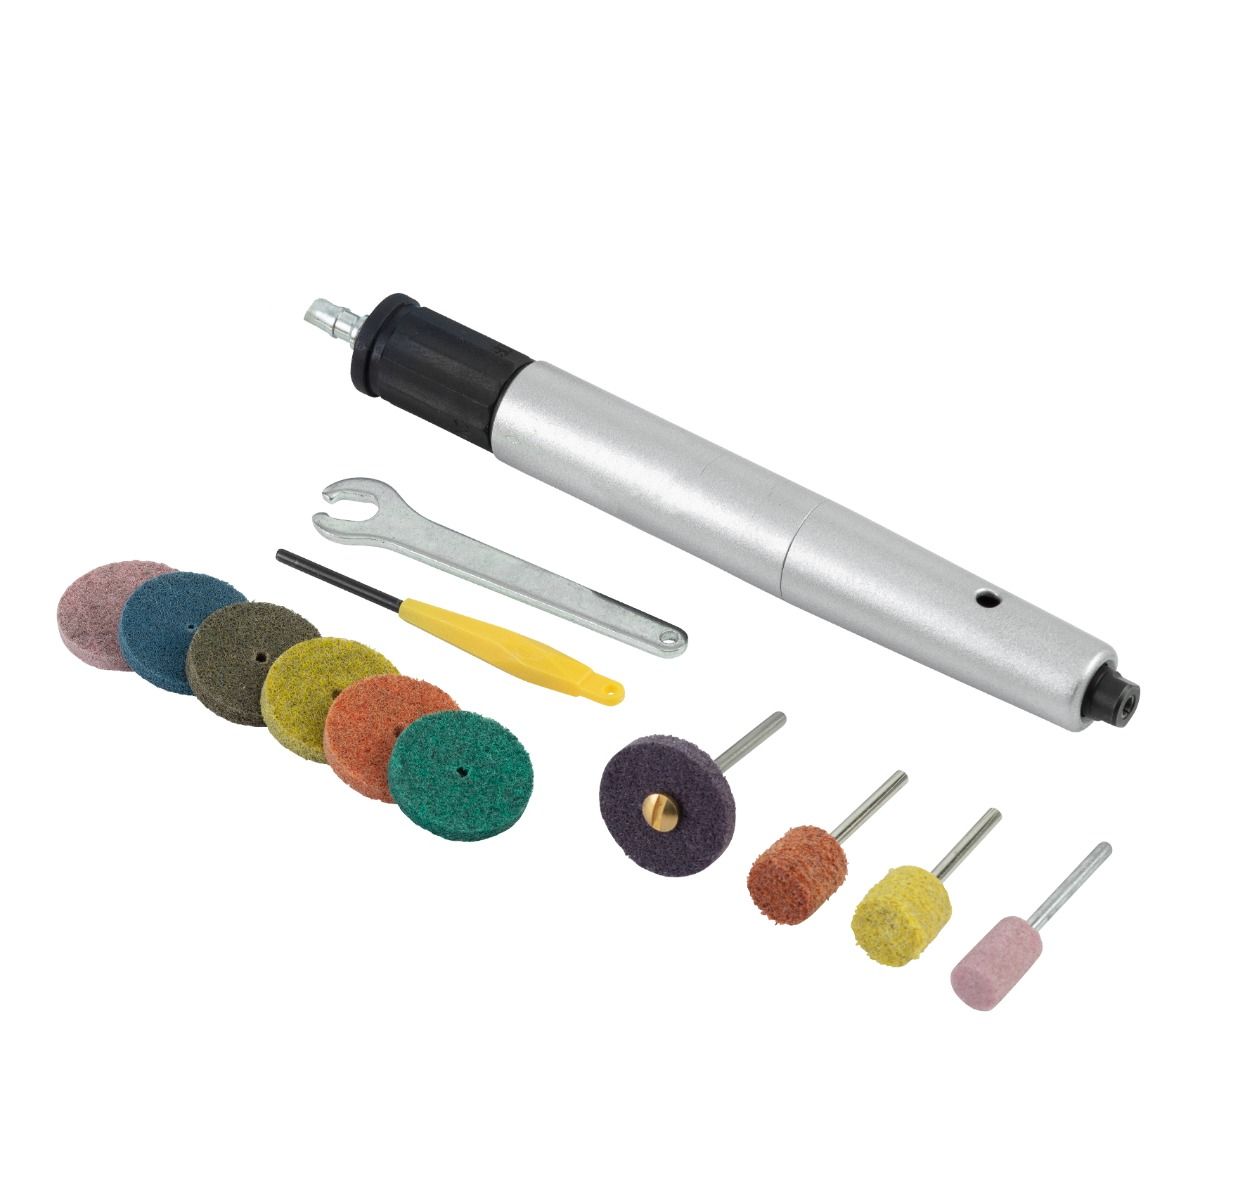 Axial micro grinder